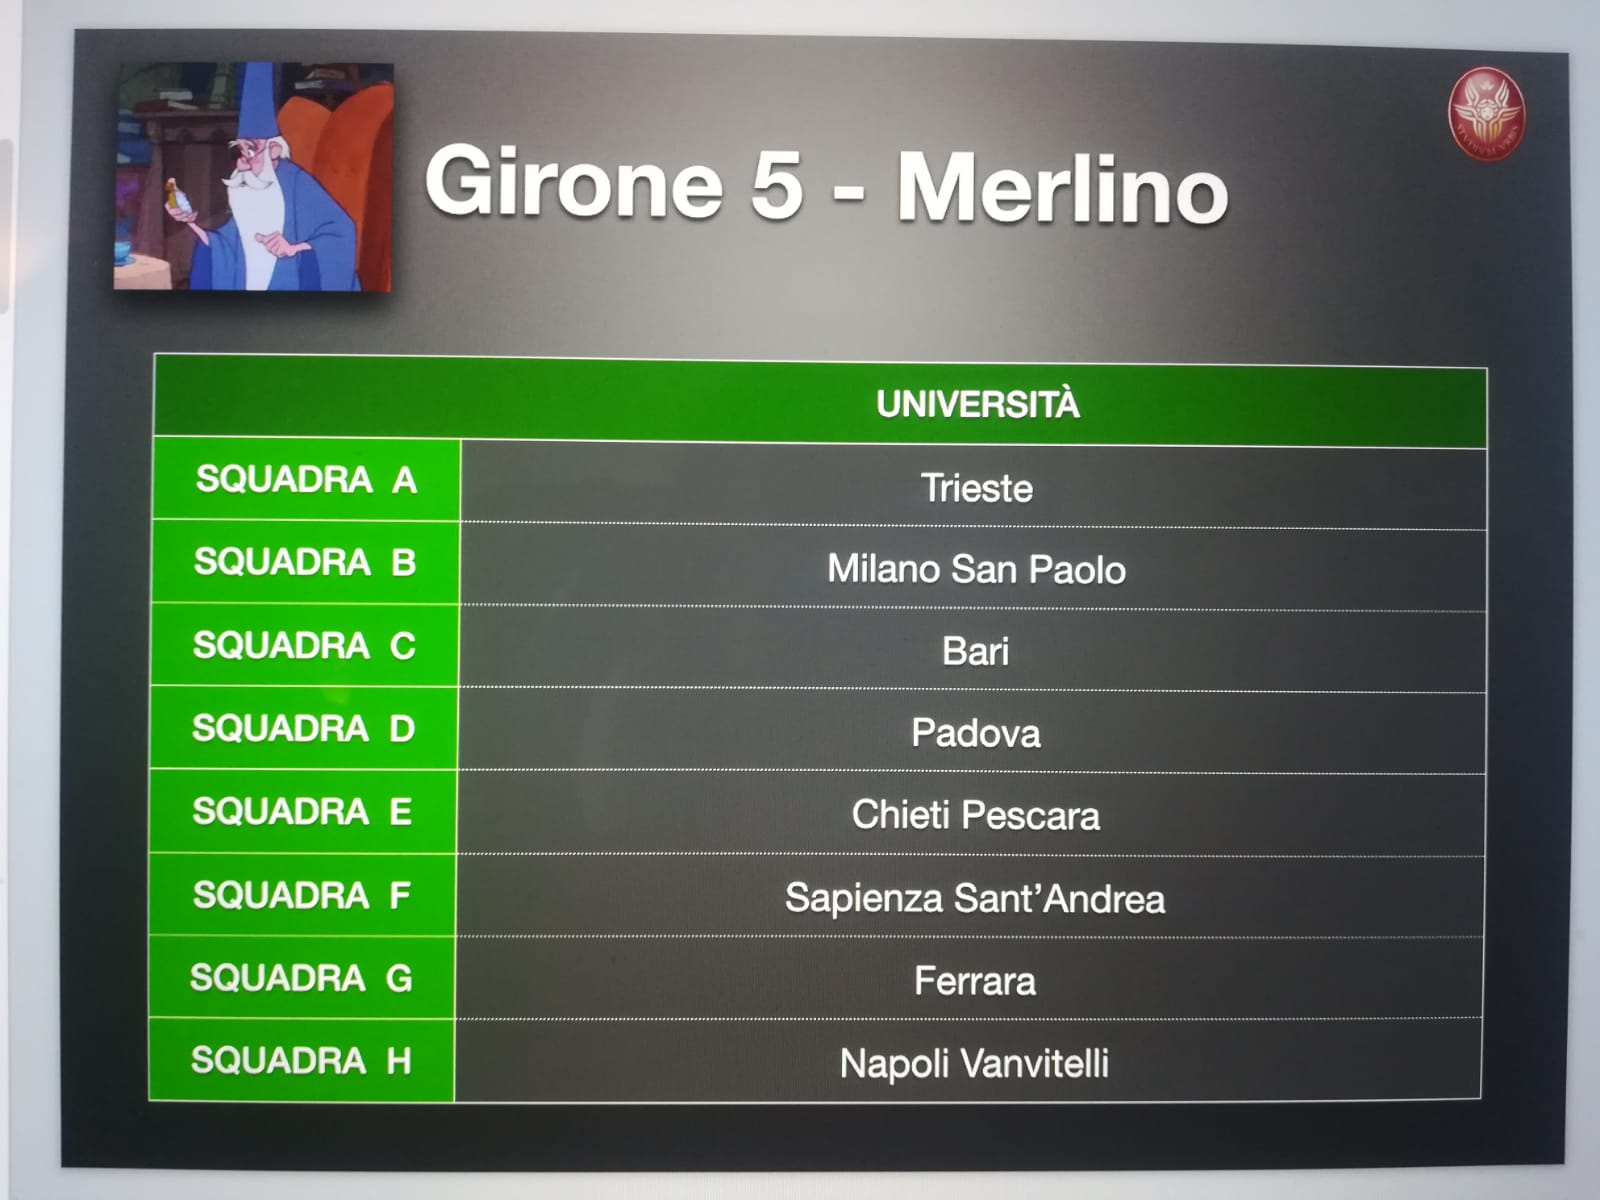 Girone 5